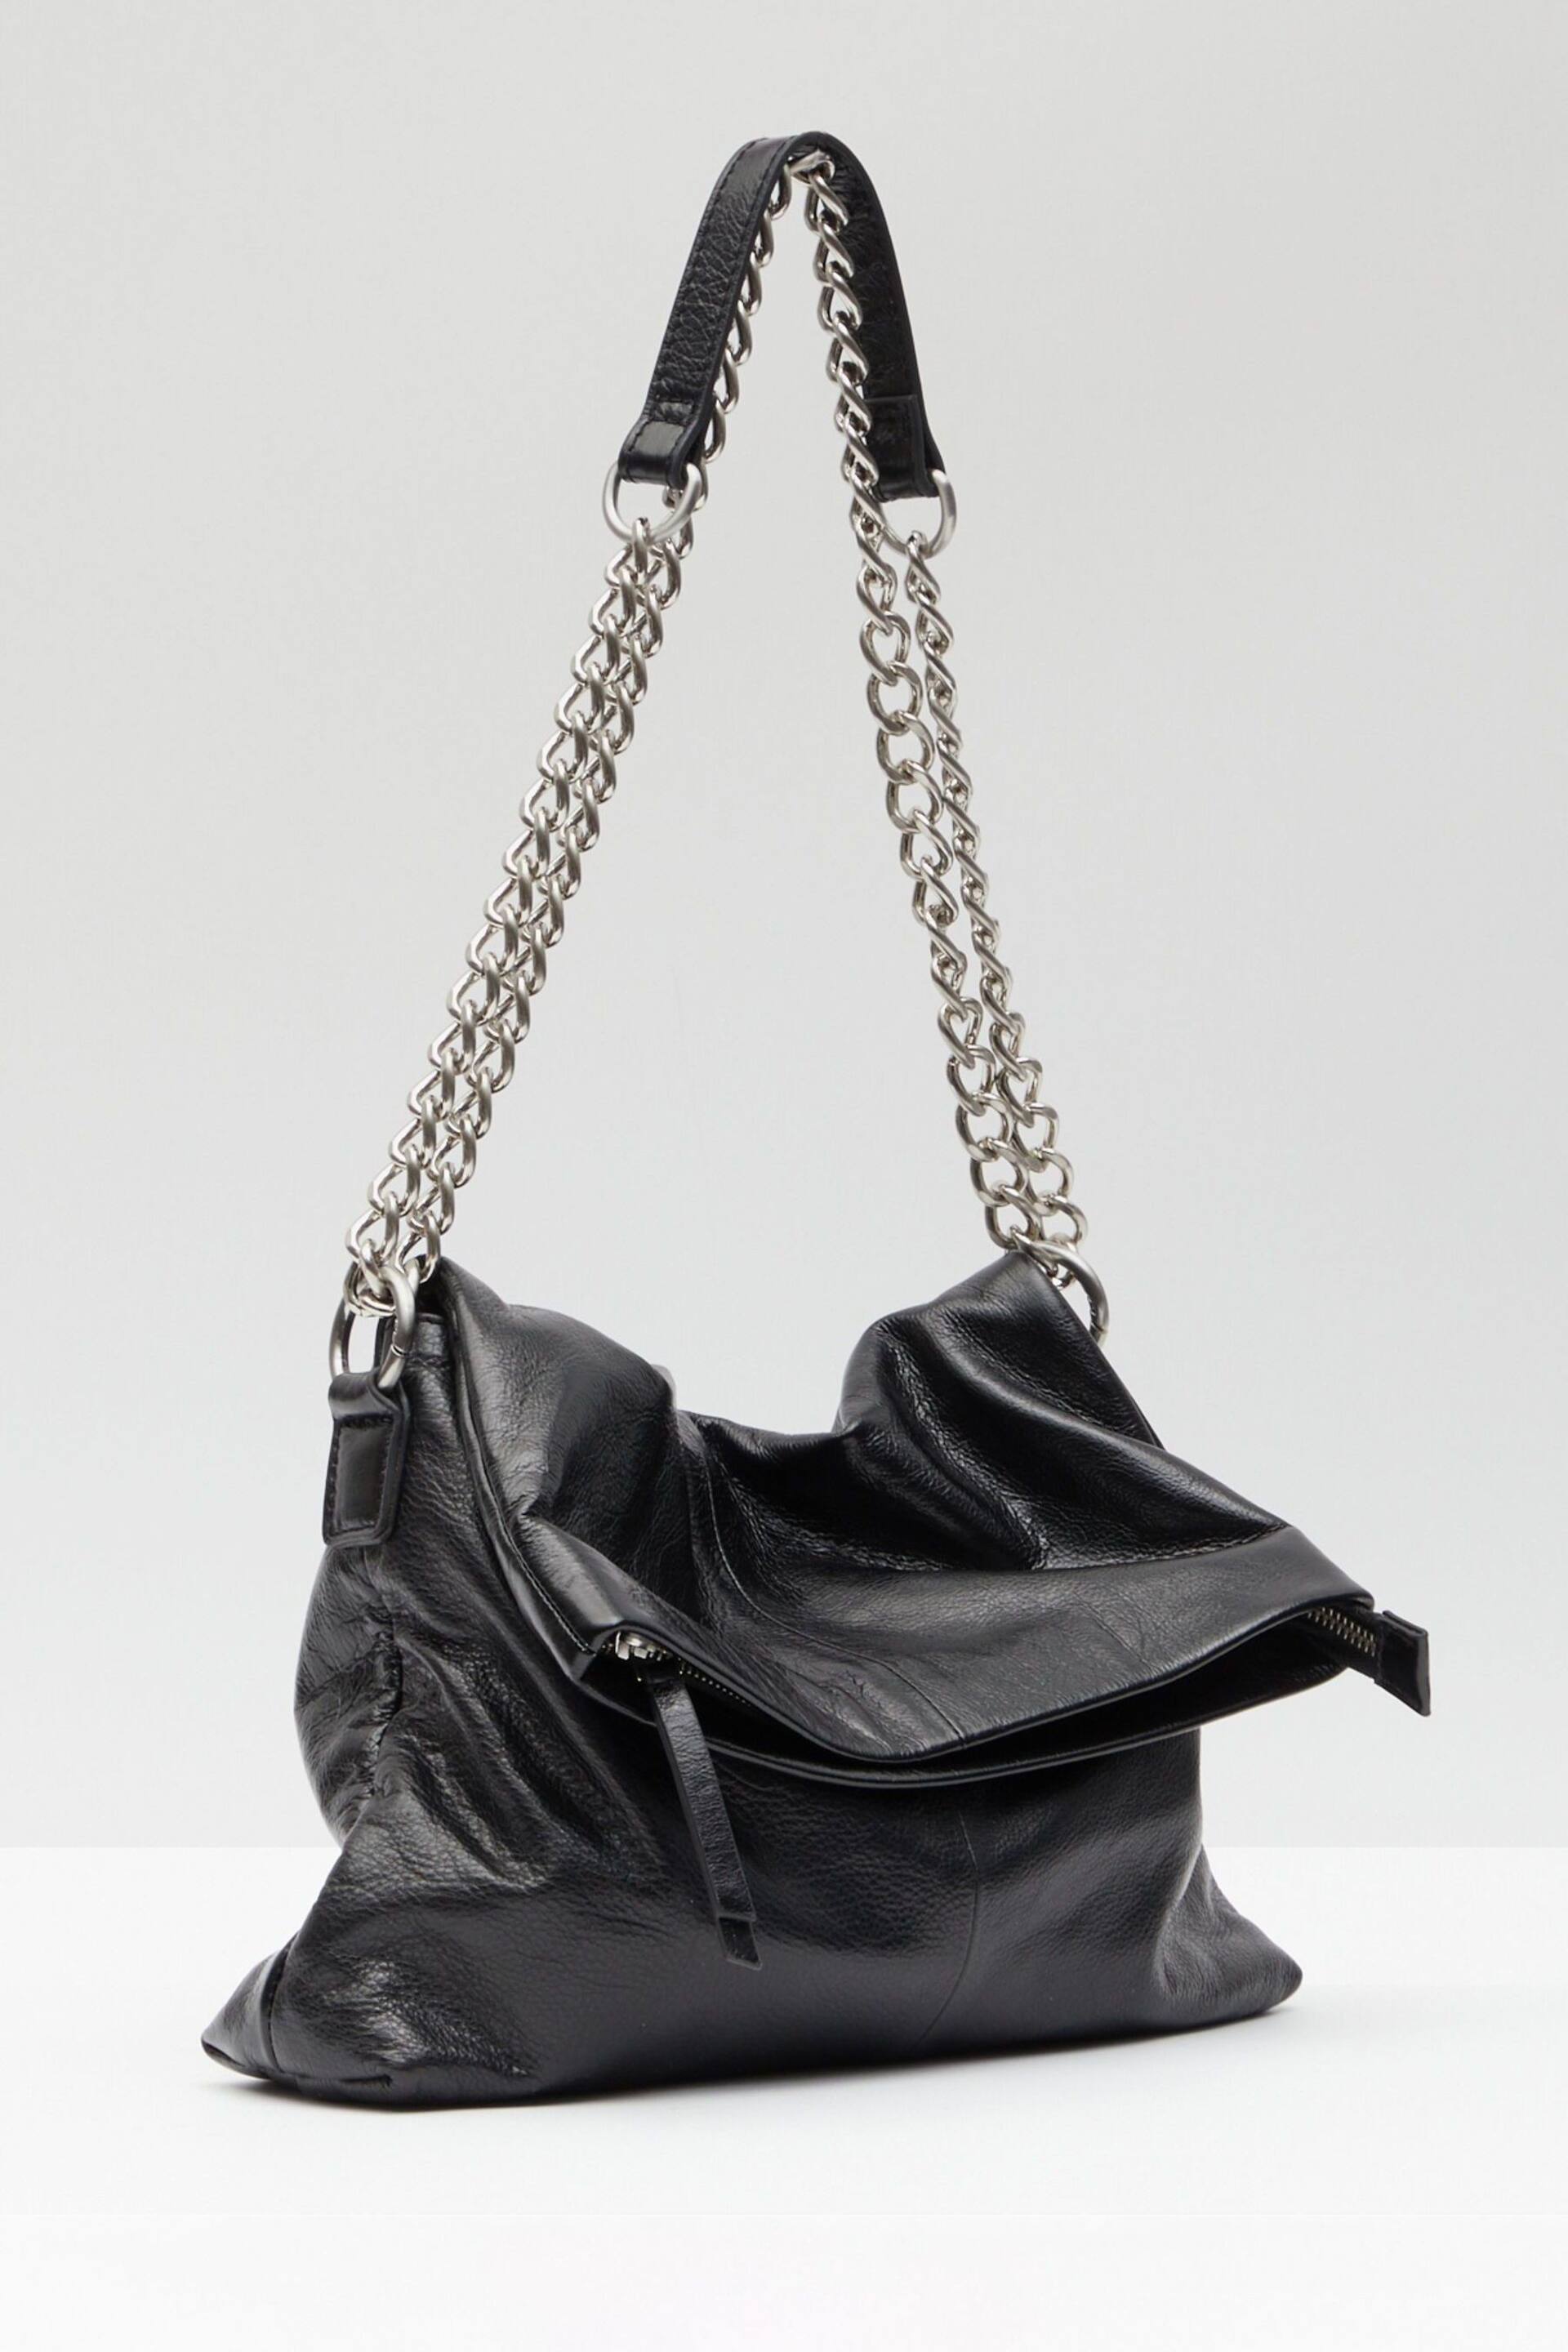 Hush Black Perrie Chain Cross-body Bag - Image 2 of 4